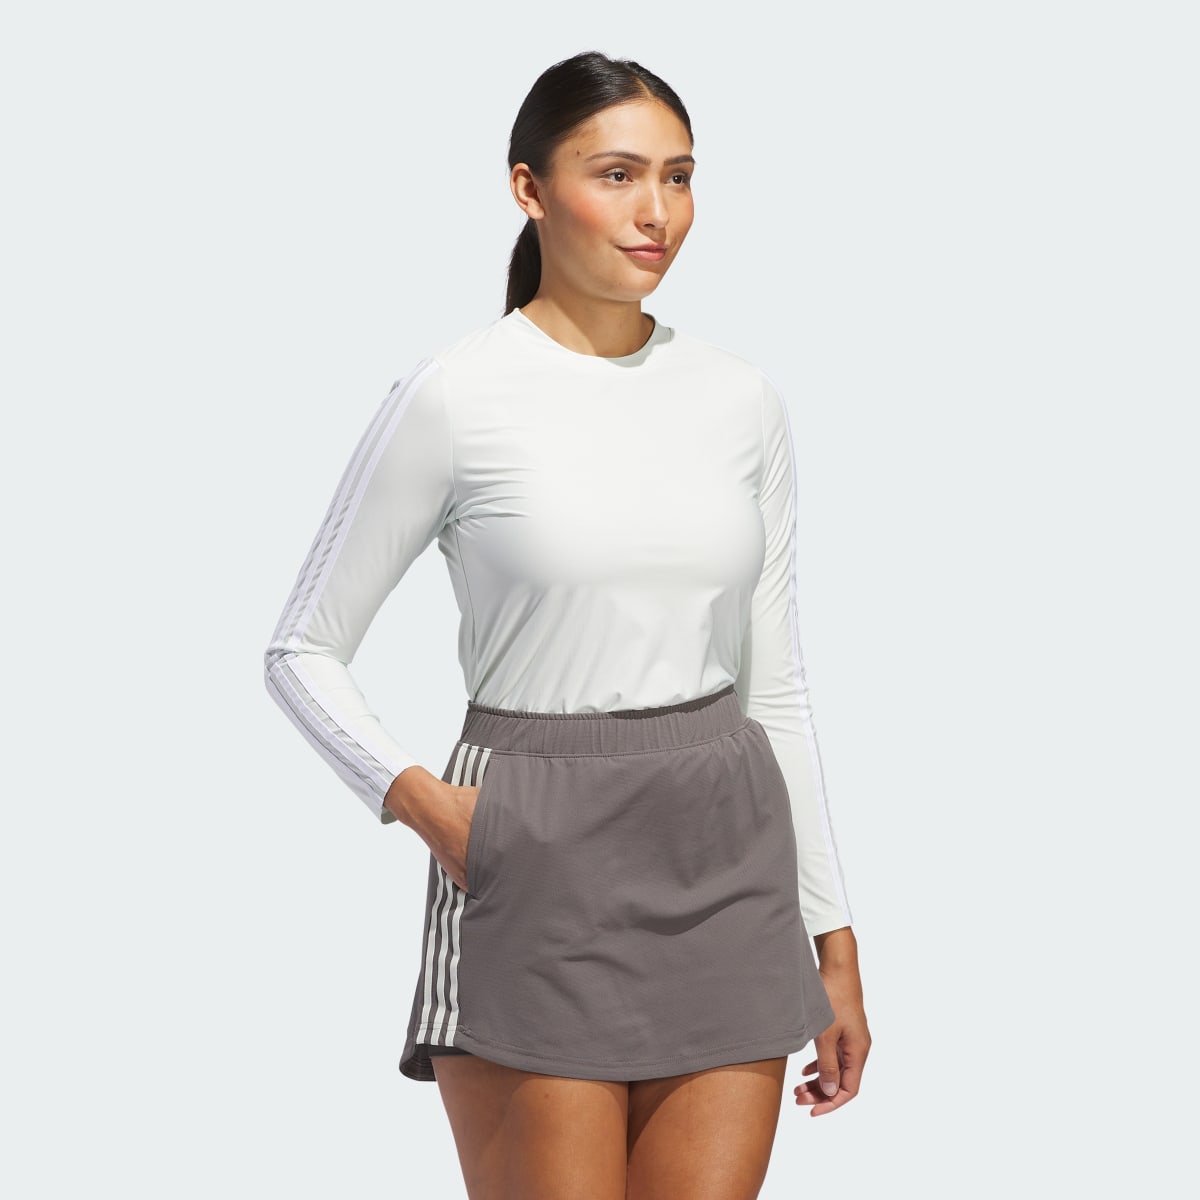 Adidas Women's Ultimate365 TWISTKNIT Long Sleeve Shirt. 4